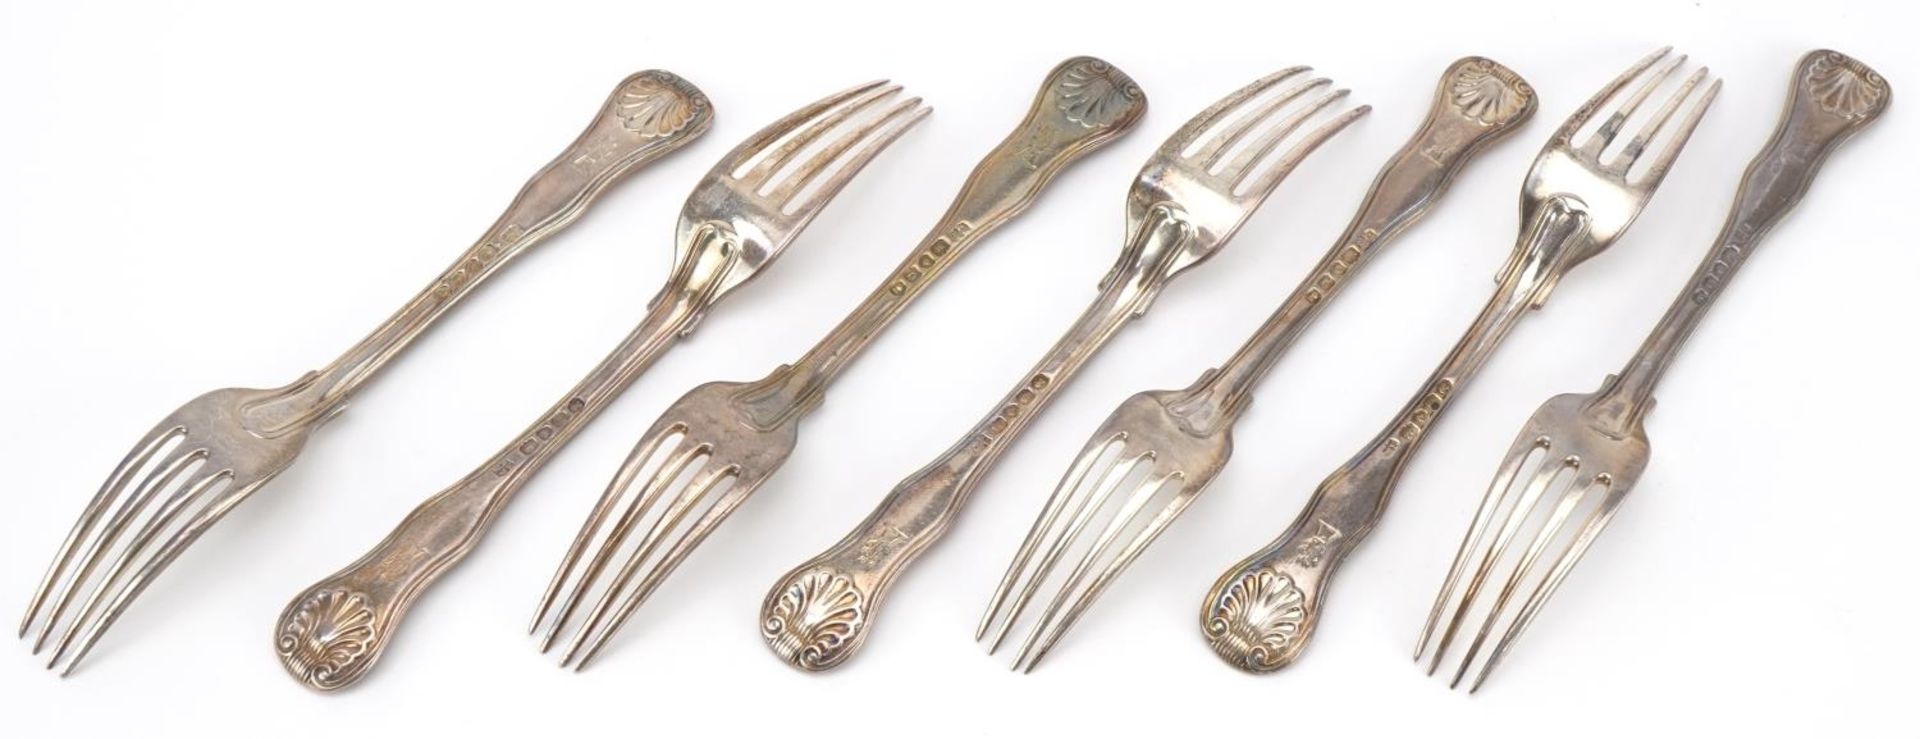 Morris & Michael Emmanuel, seven George IV matching silver forks, London 1828, 17.5cm in length, - Image 2 of 3